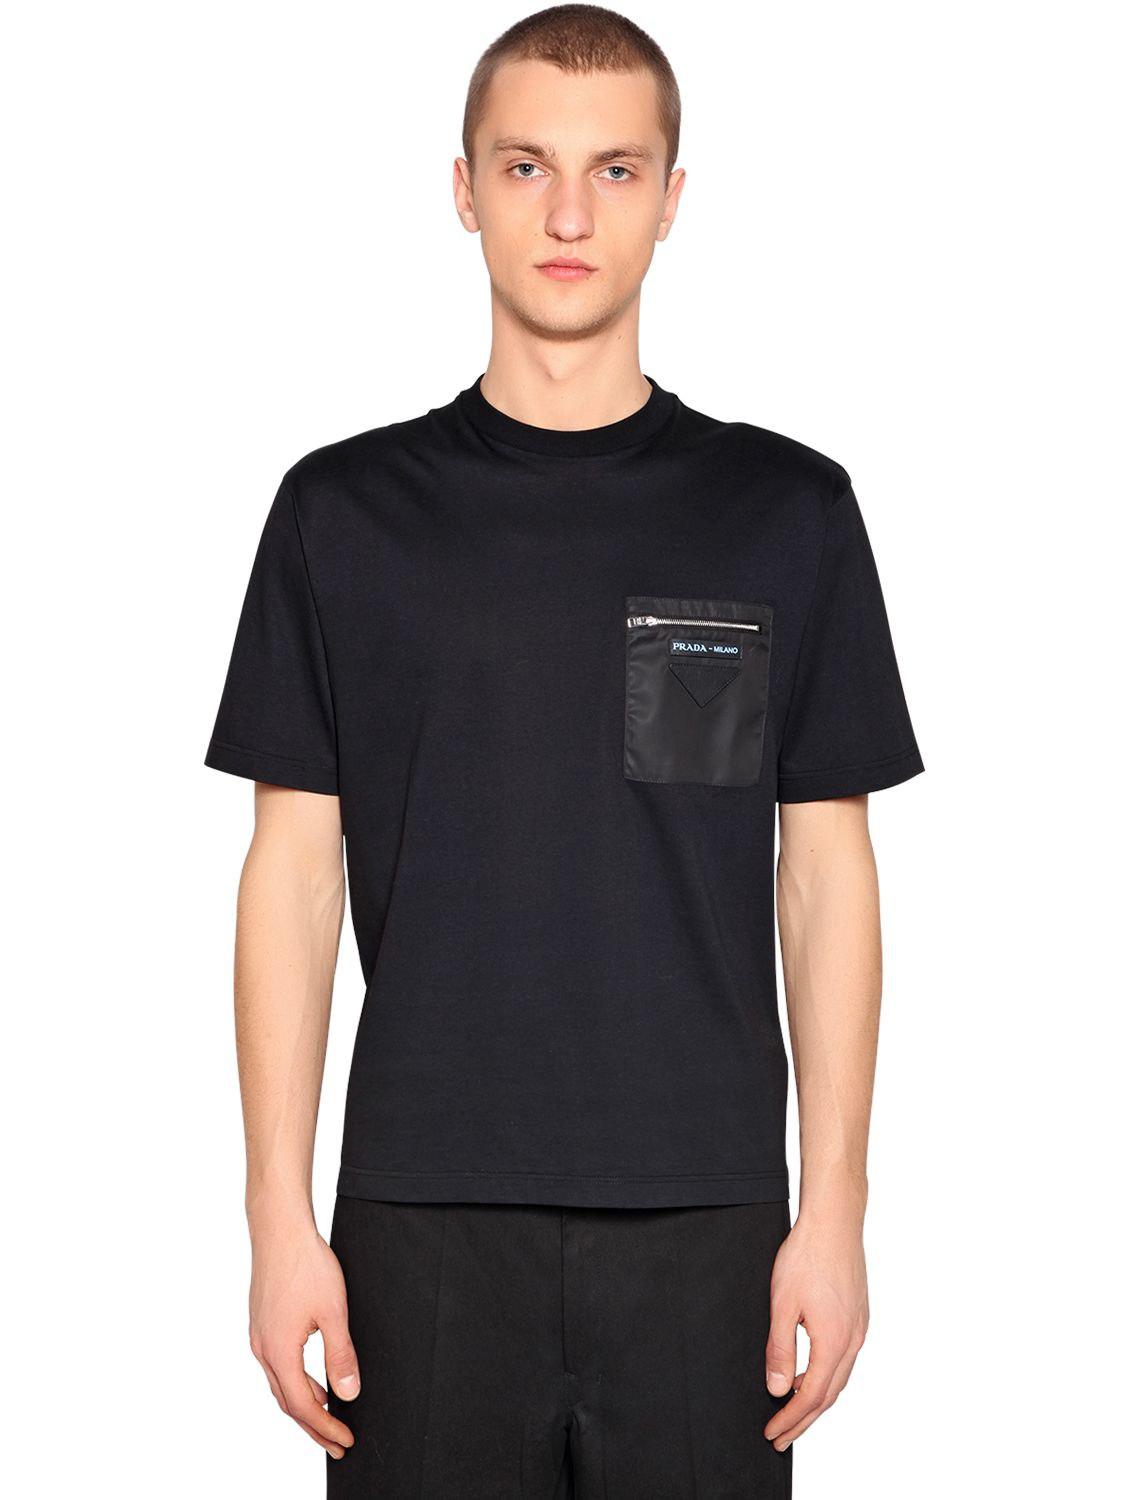 Prada Cotton Jersey T-shirt W/ Nylon Pocket in Black for Men - Lyst